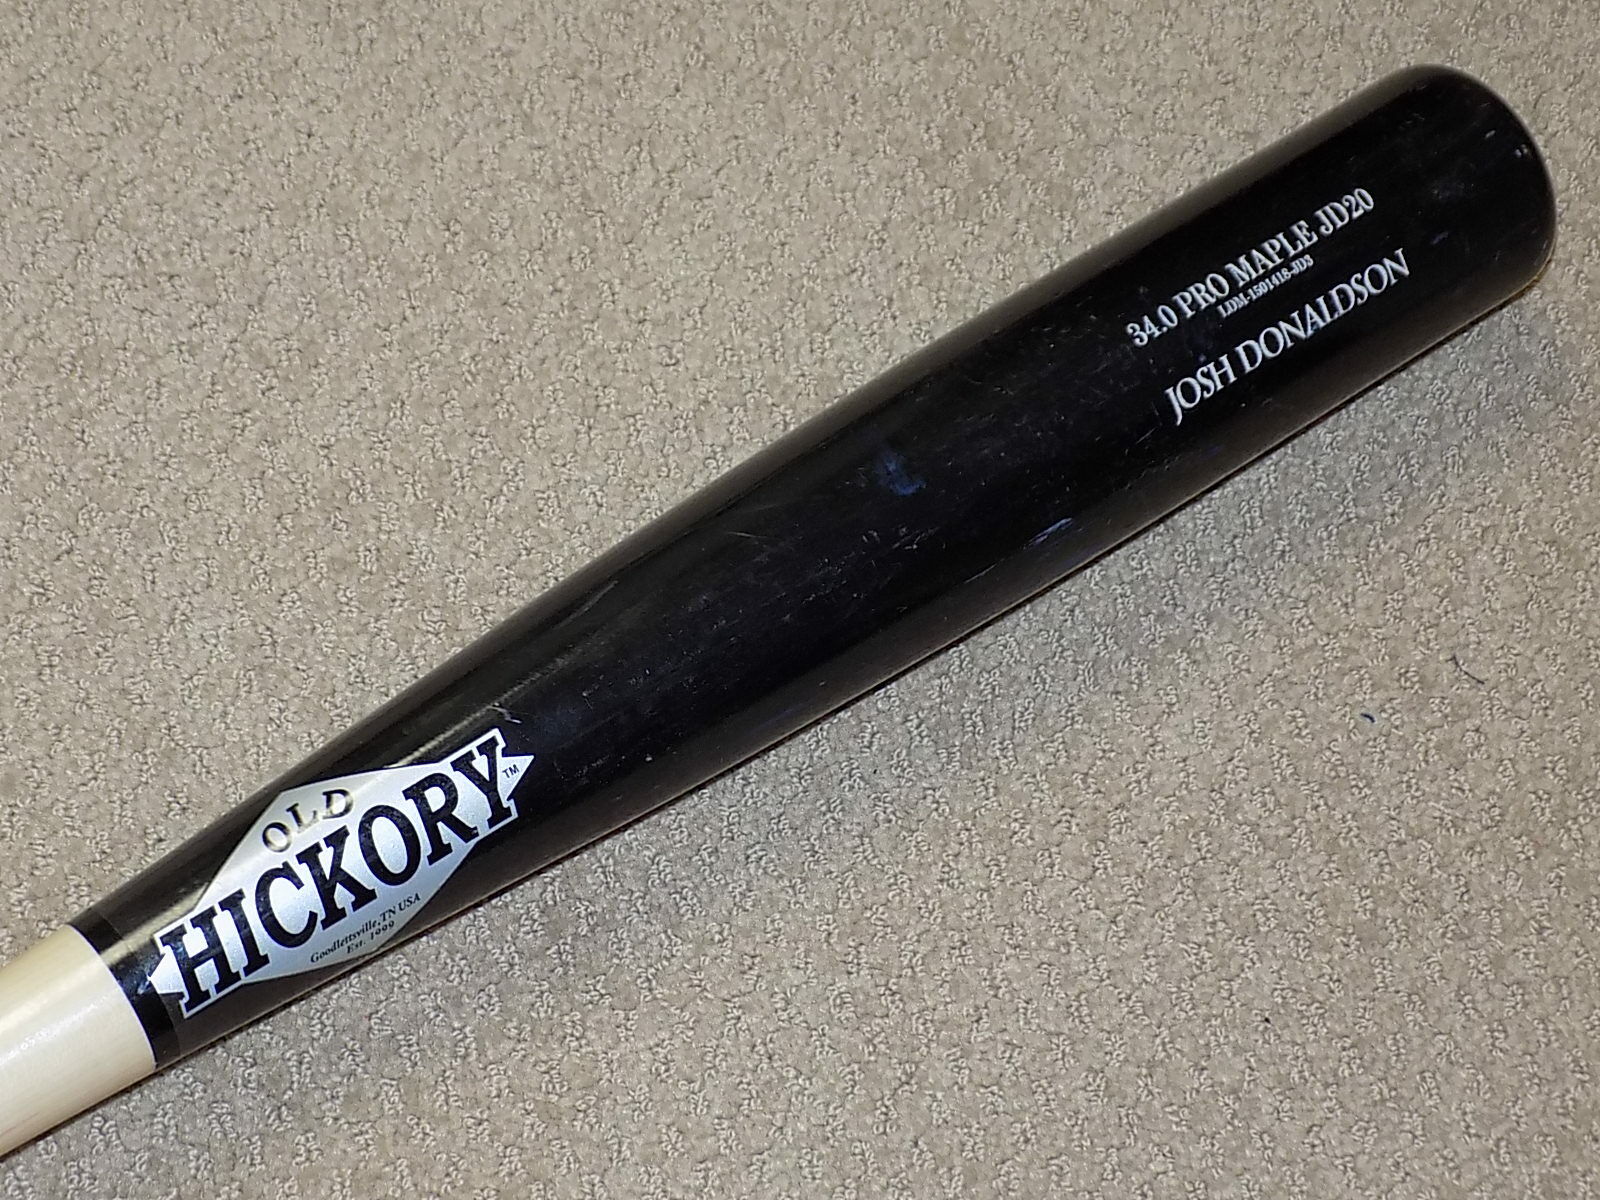 Josh Donaldson Maple Old Hickory Game Used Bat 2015 Toronto Blue Jays AL MVP